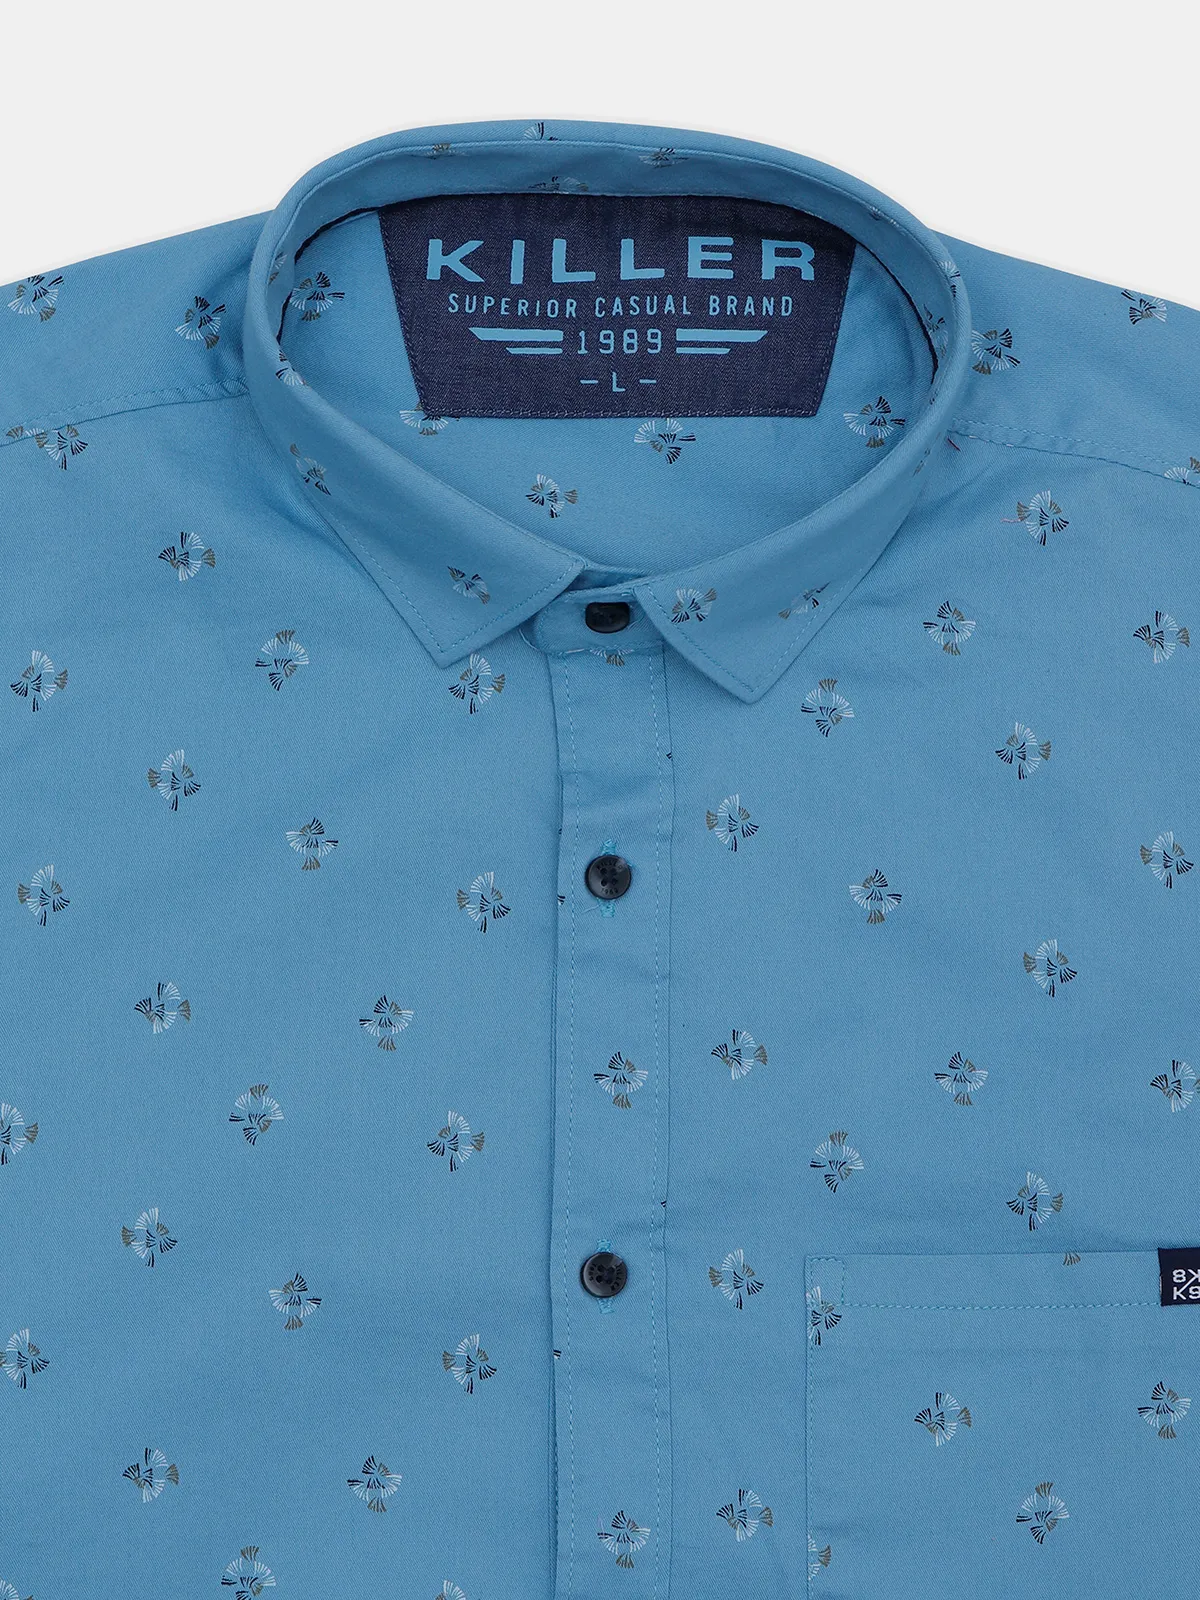 Killer casual wear printed blue shirt